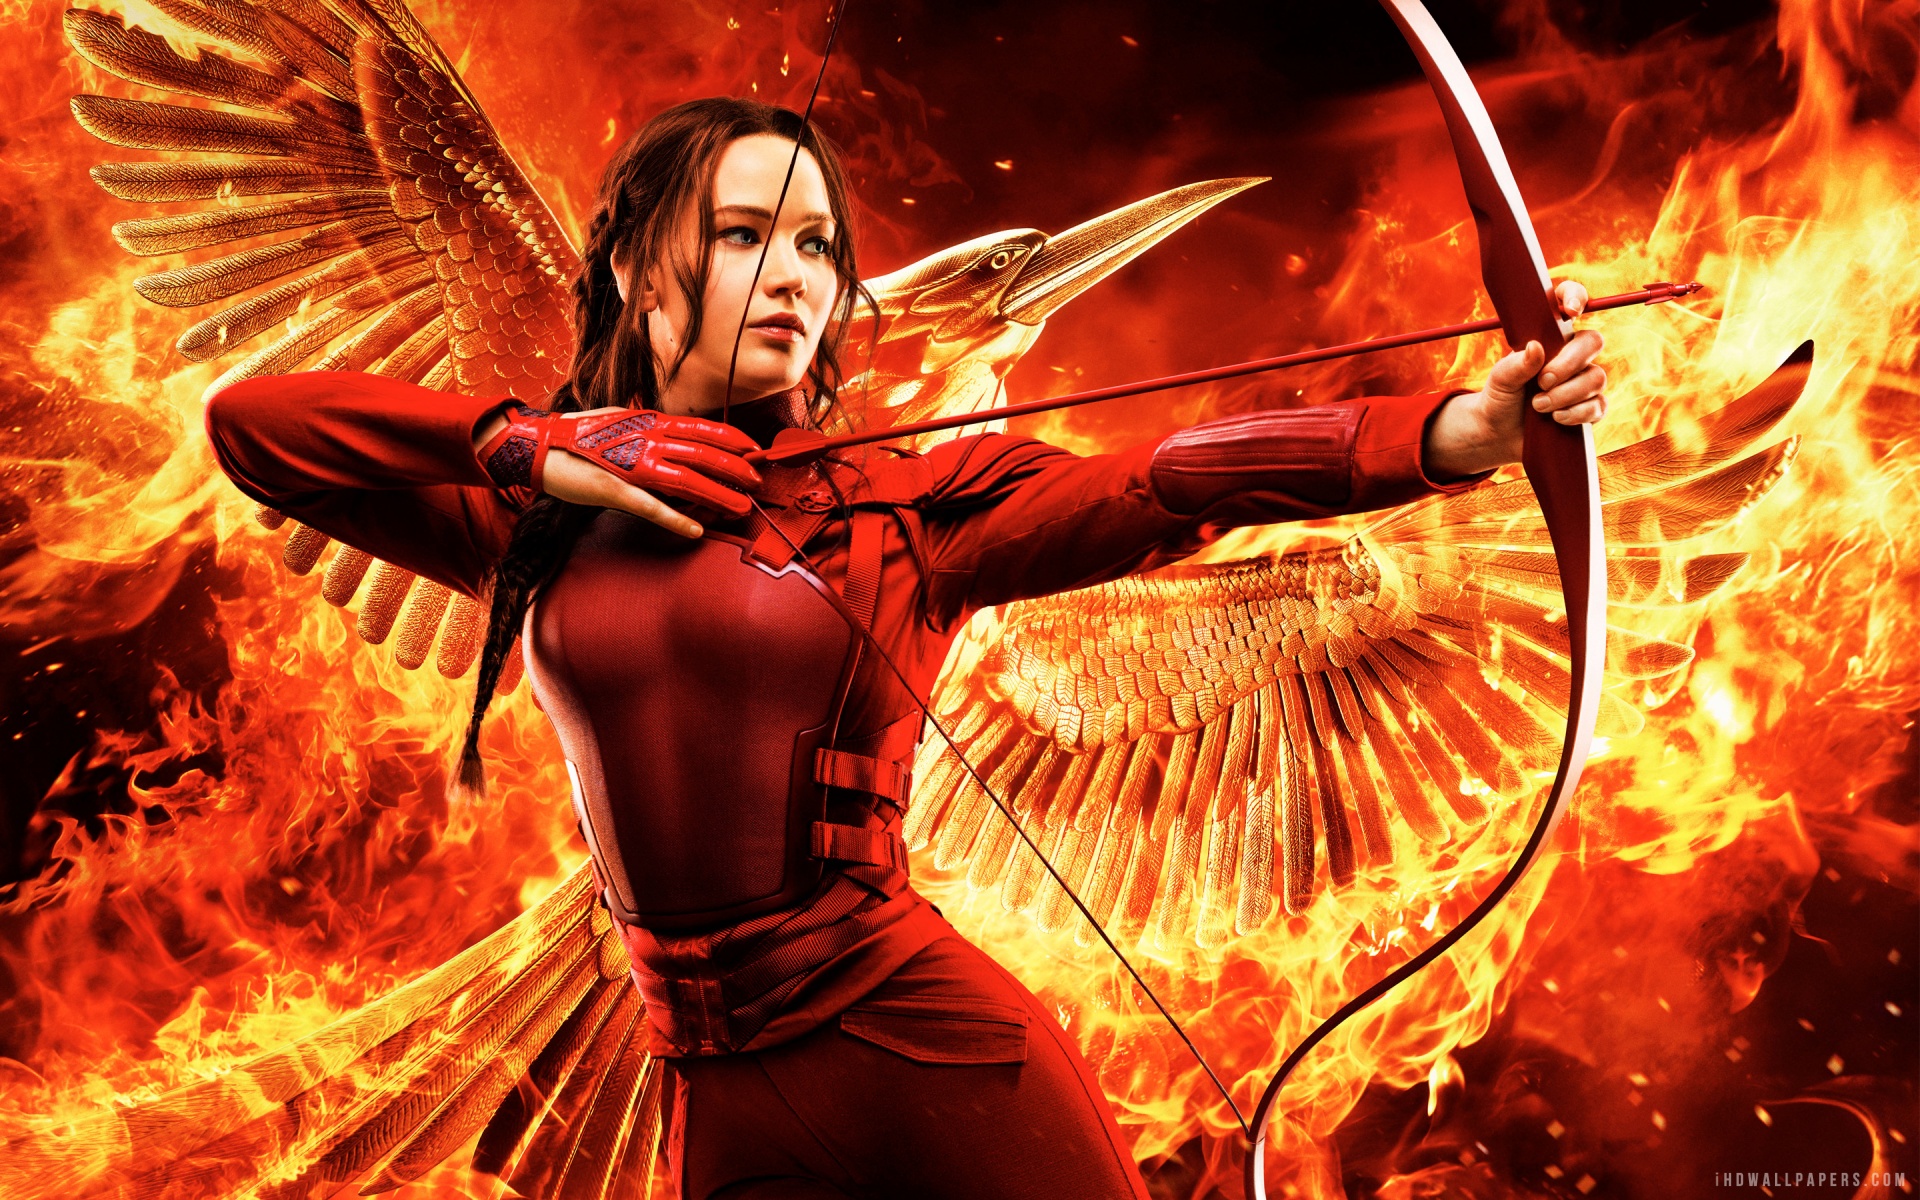  The Hunger Games Mockingjay Part 2 2015 HD Wallpaper   iHD Wallpapers